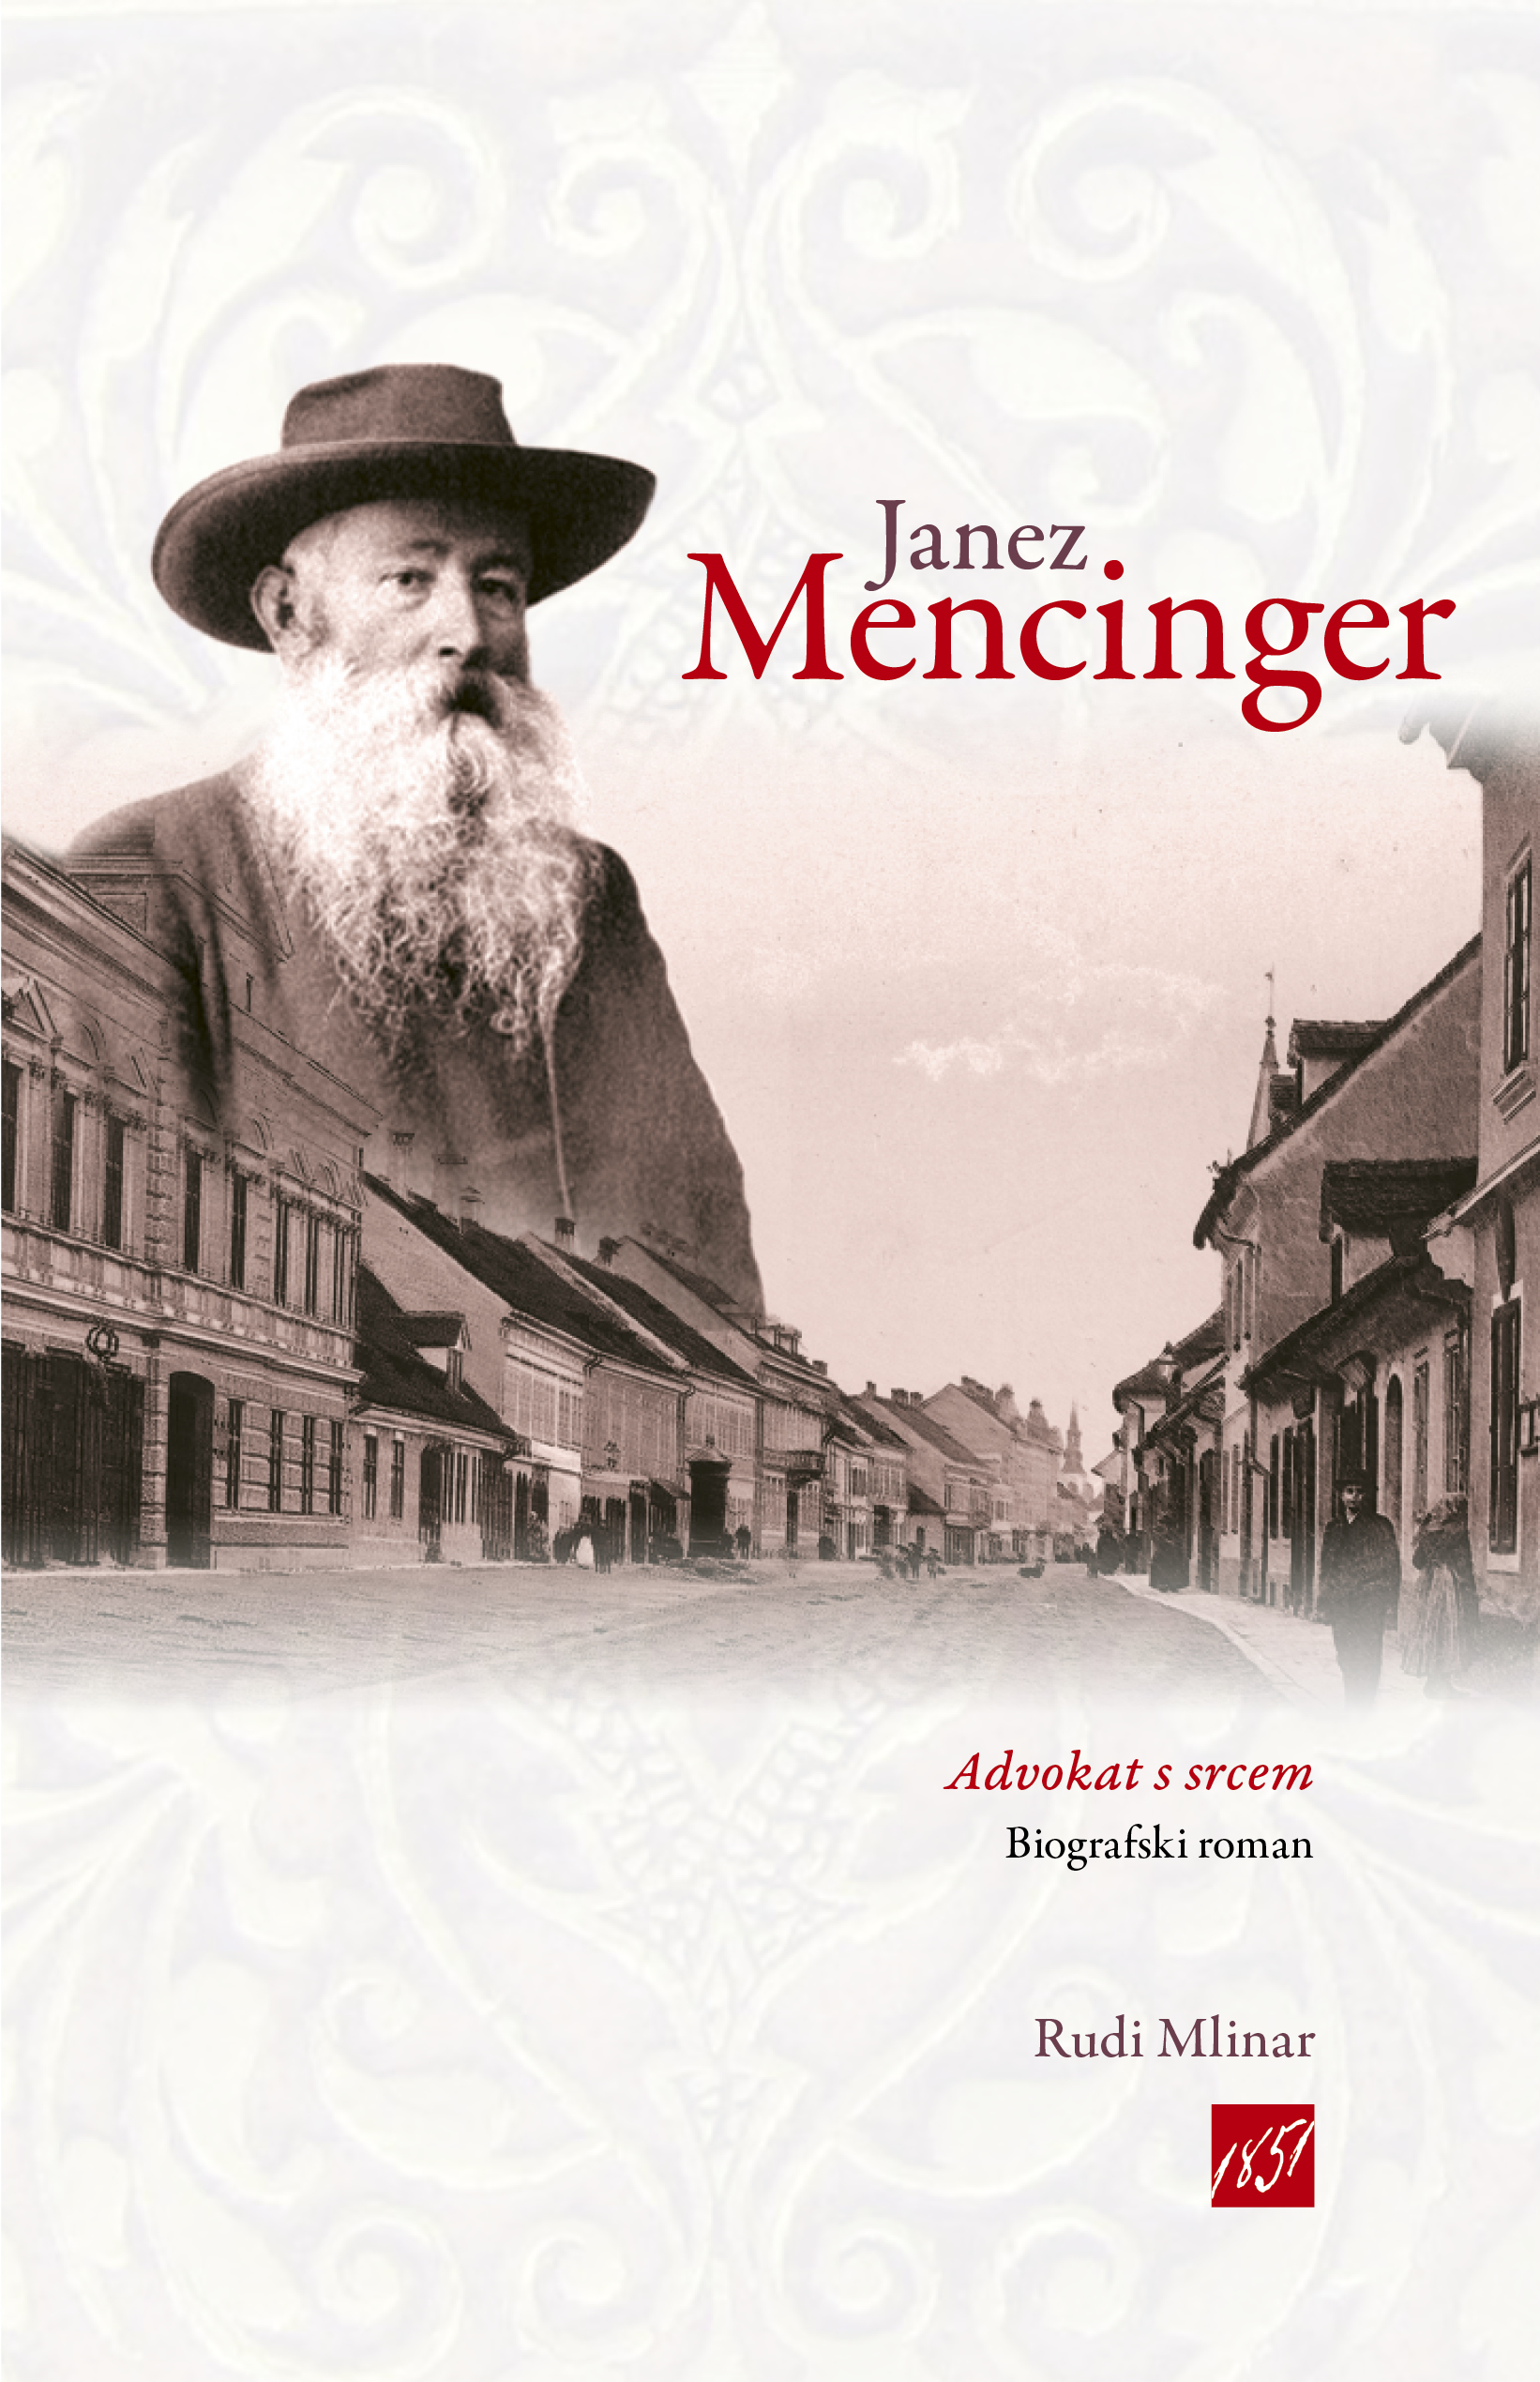 JANEZ MENCINGER